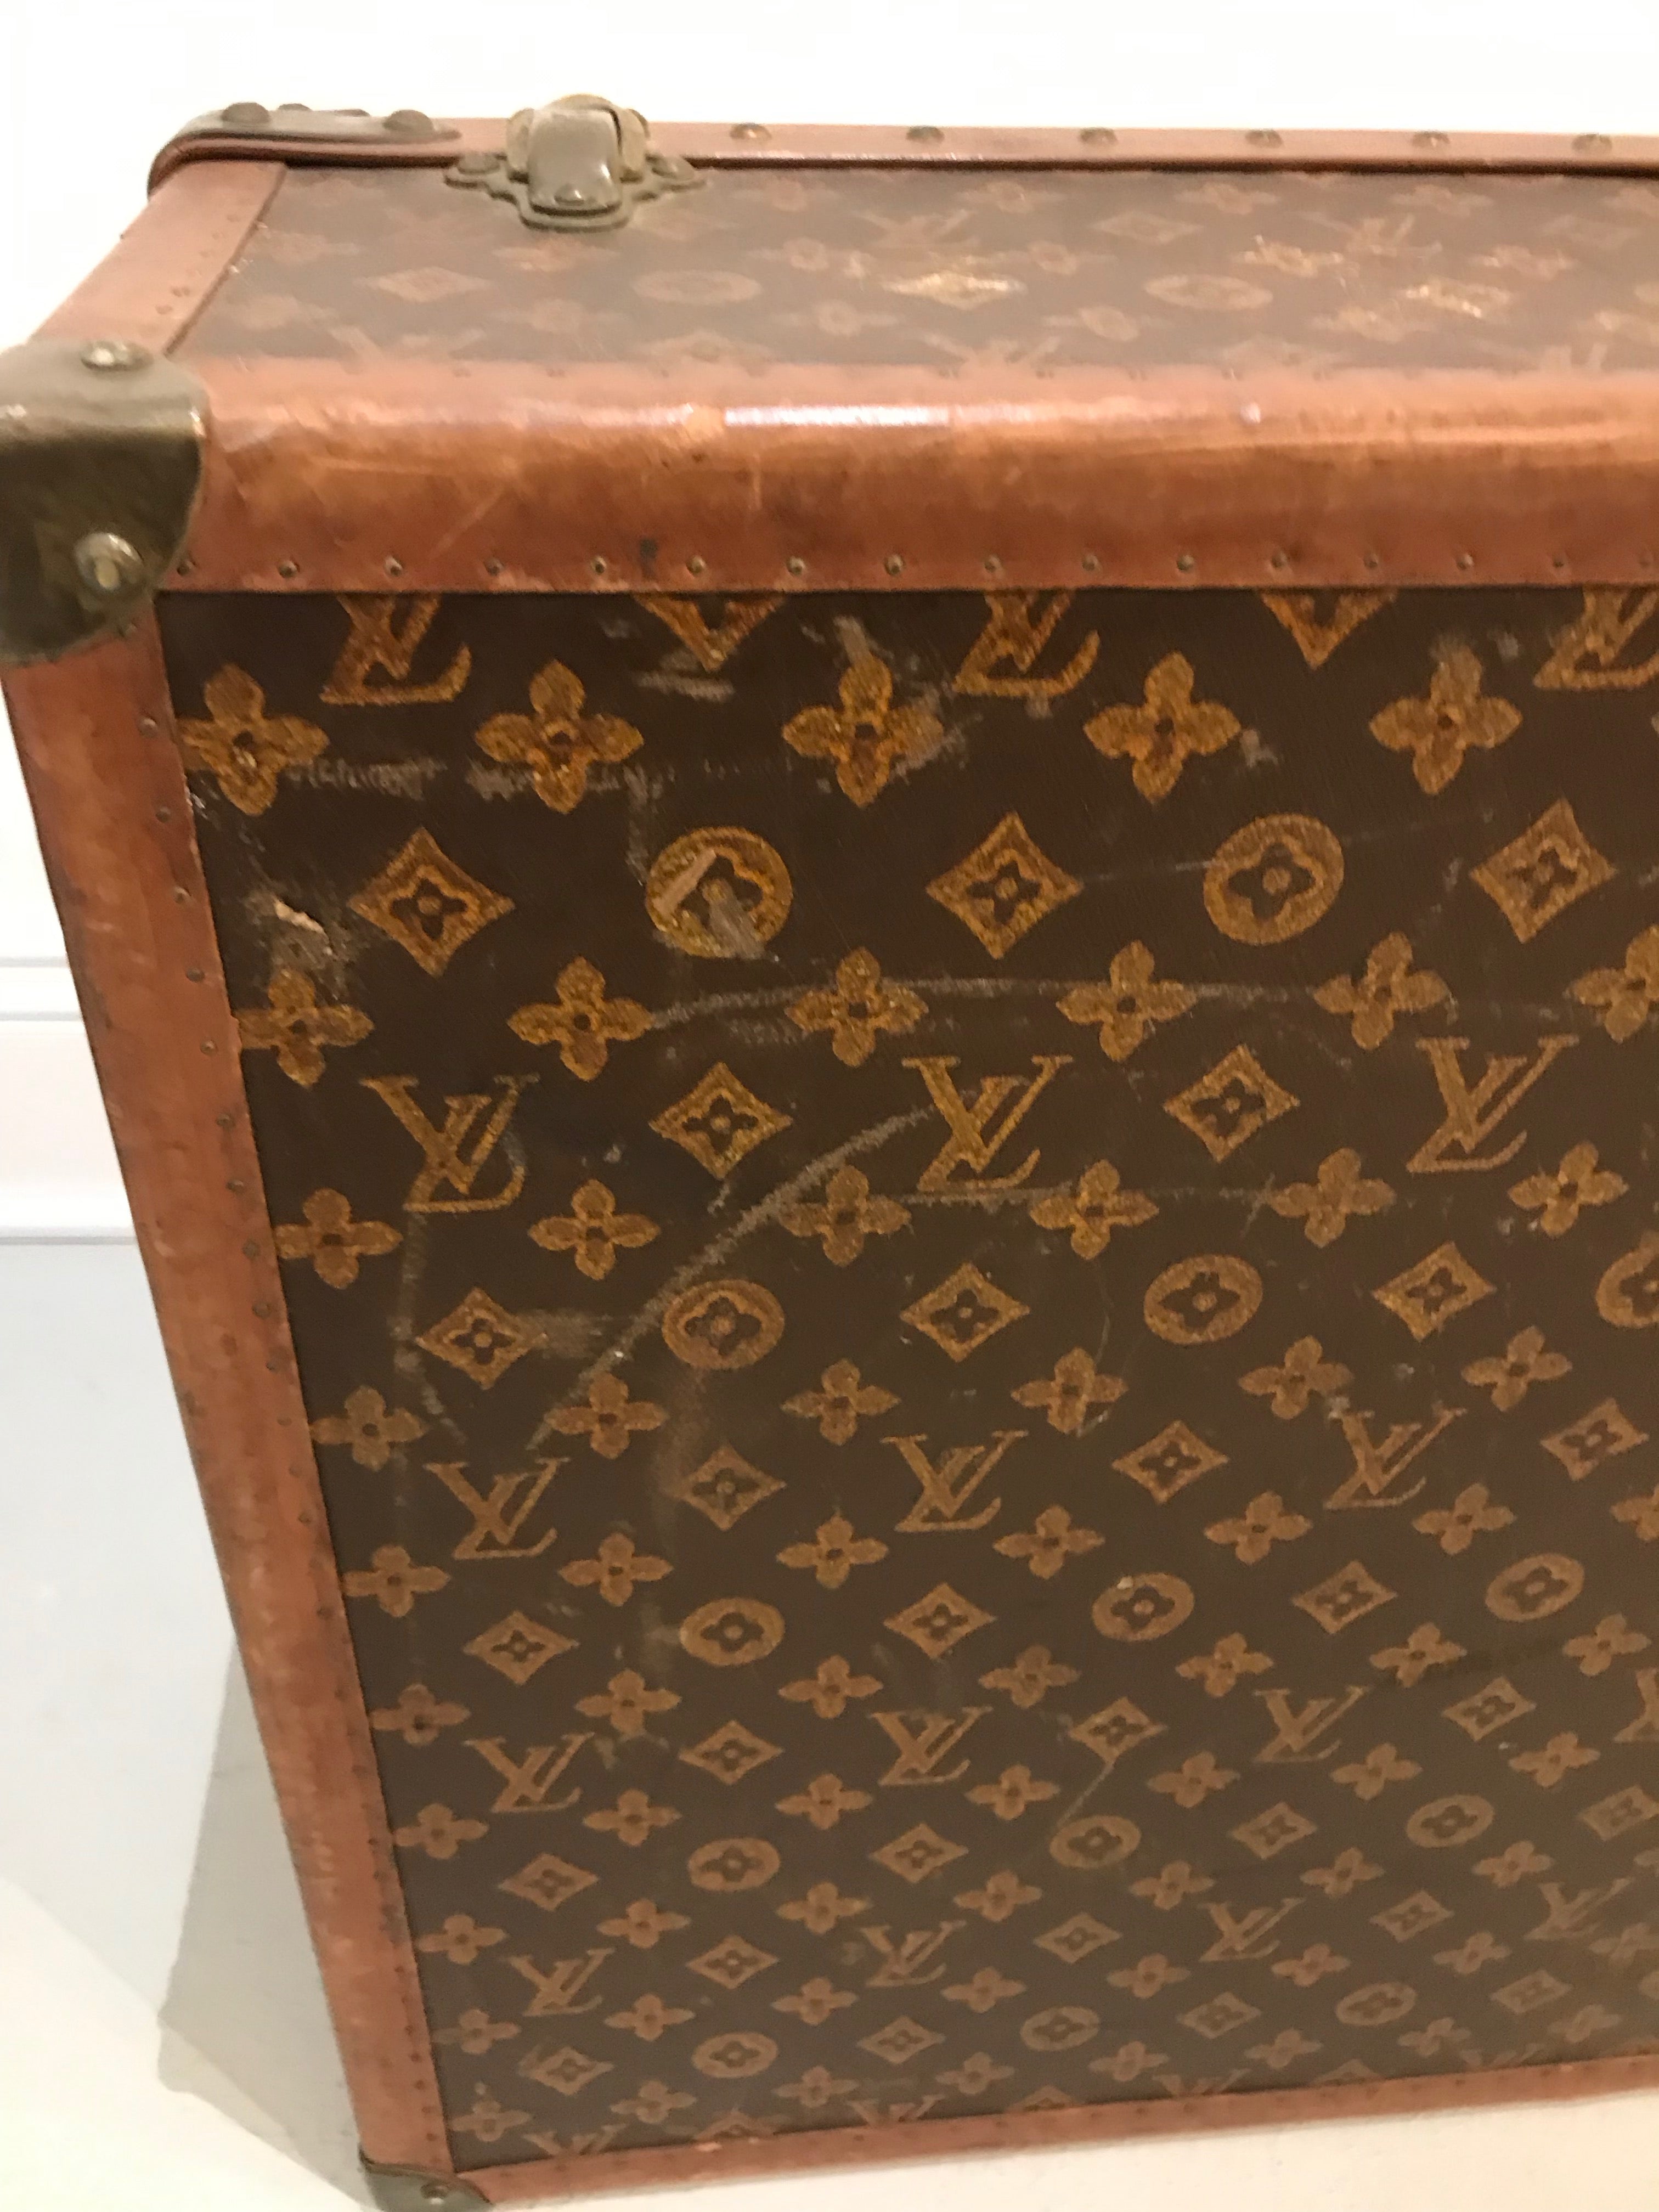 A vintage Louis Vuitton suitcase for sale in an antique shop in